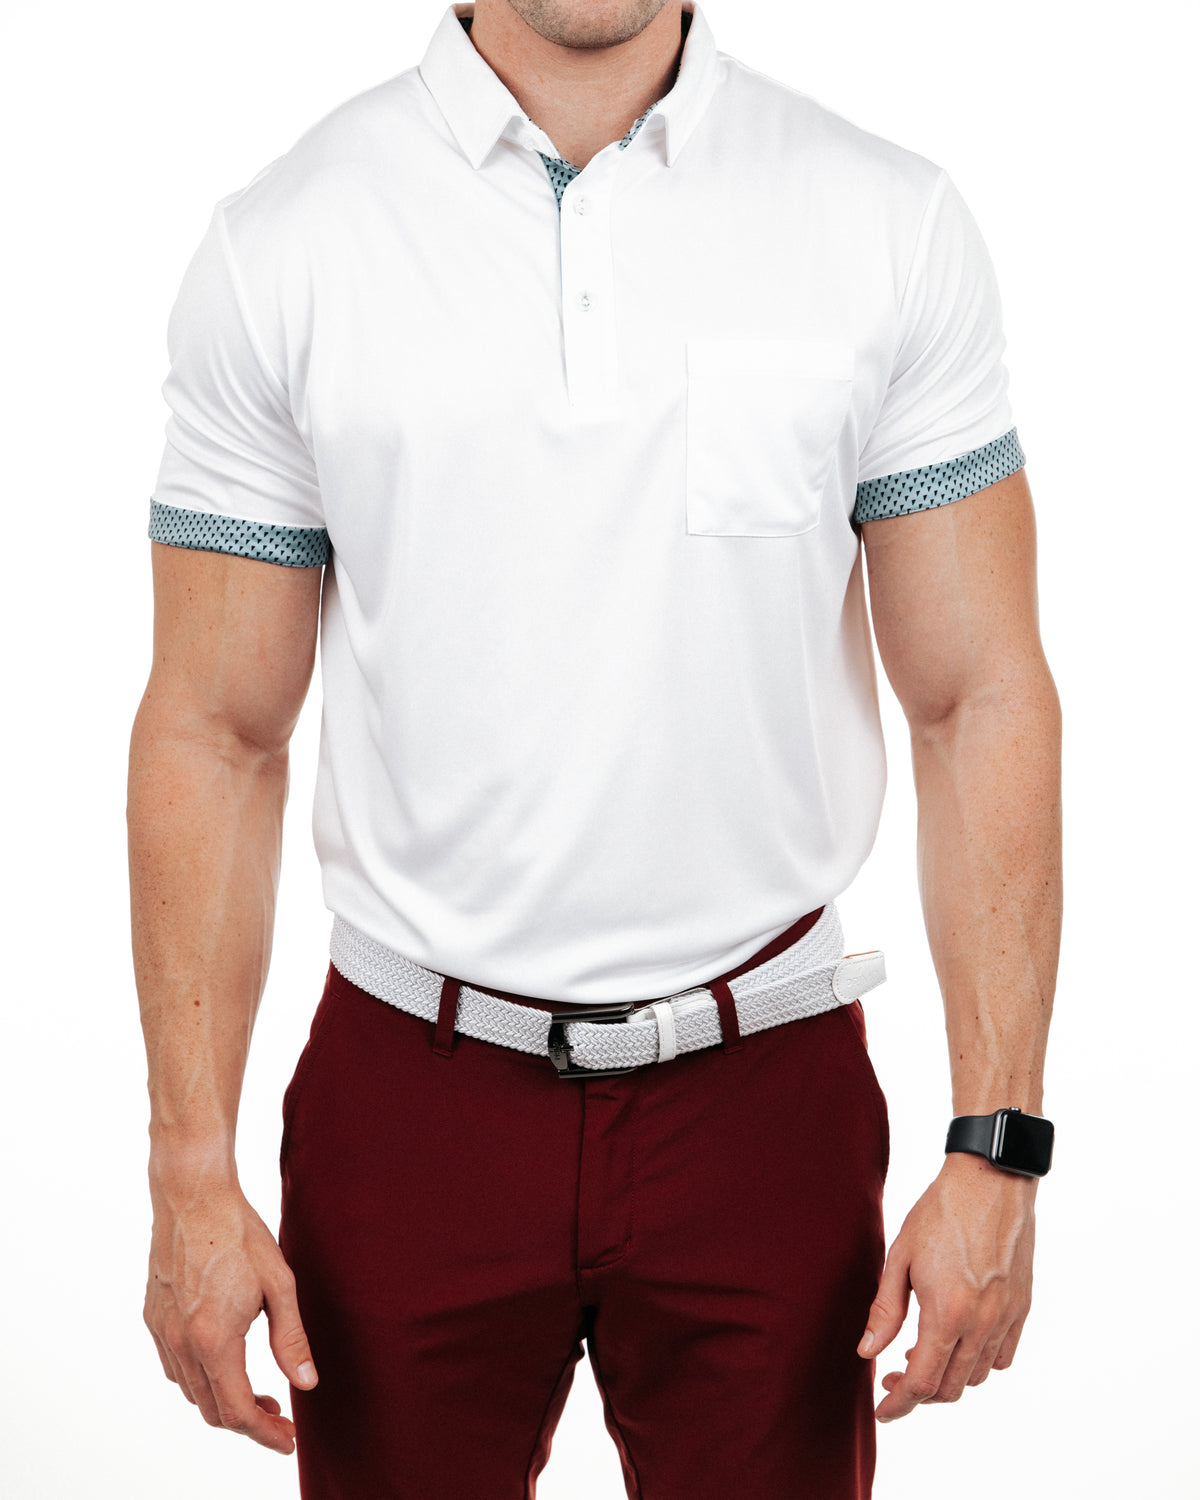 Buy Online White Pique Classic Polo T-Shirt for Men Online at Zobello